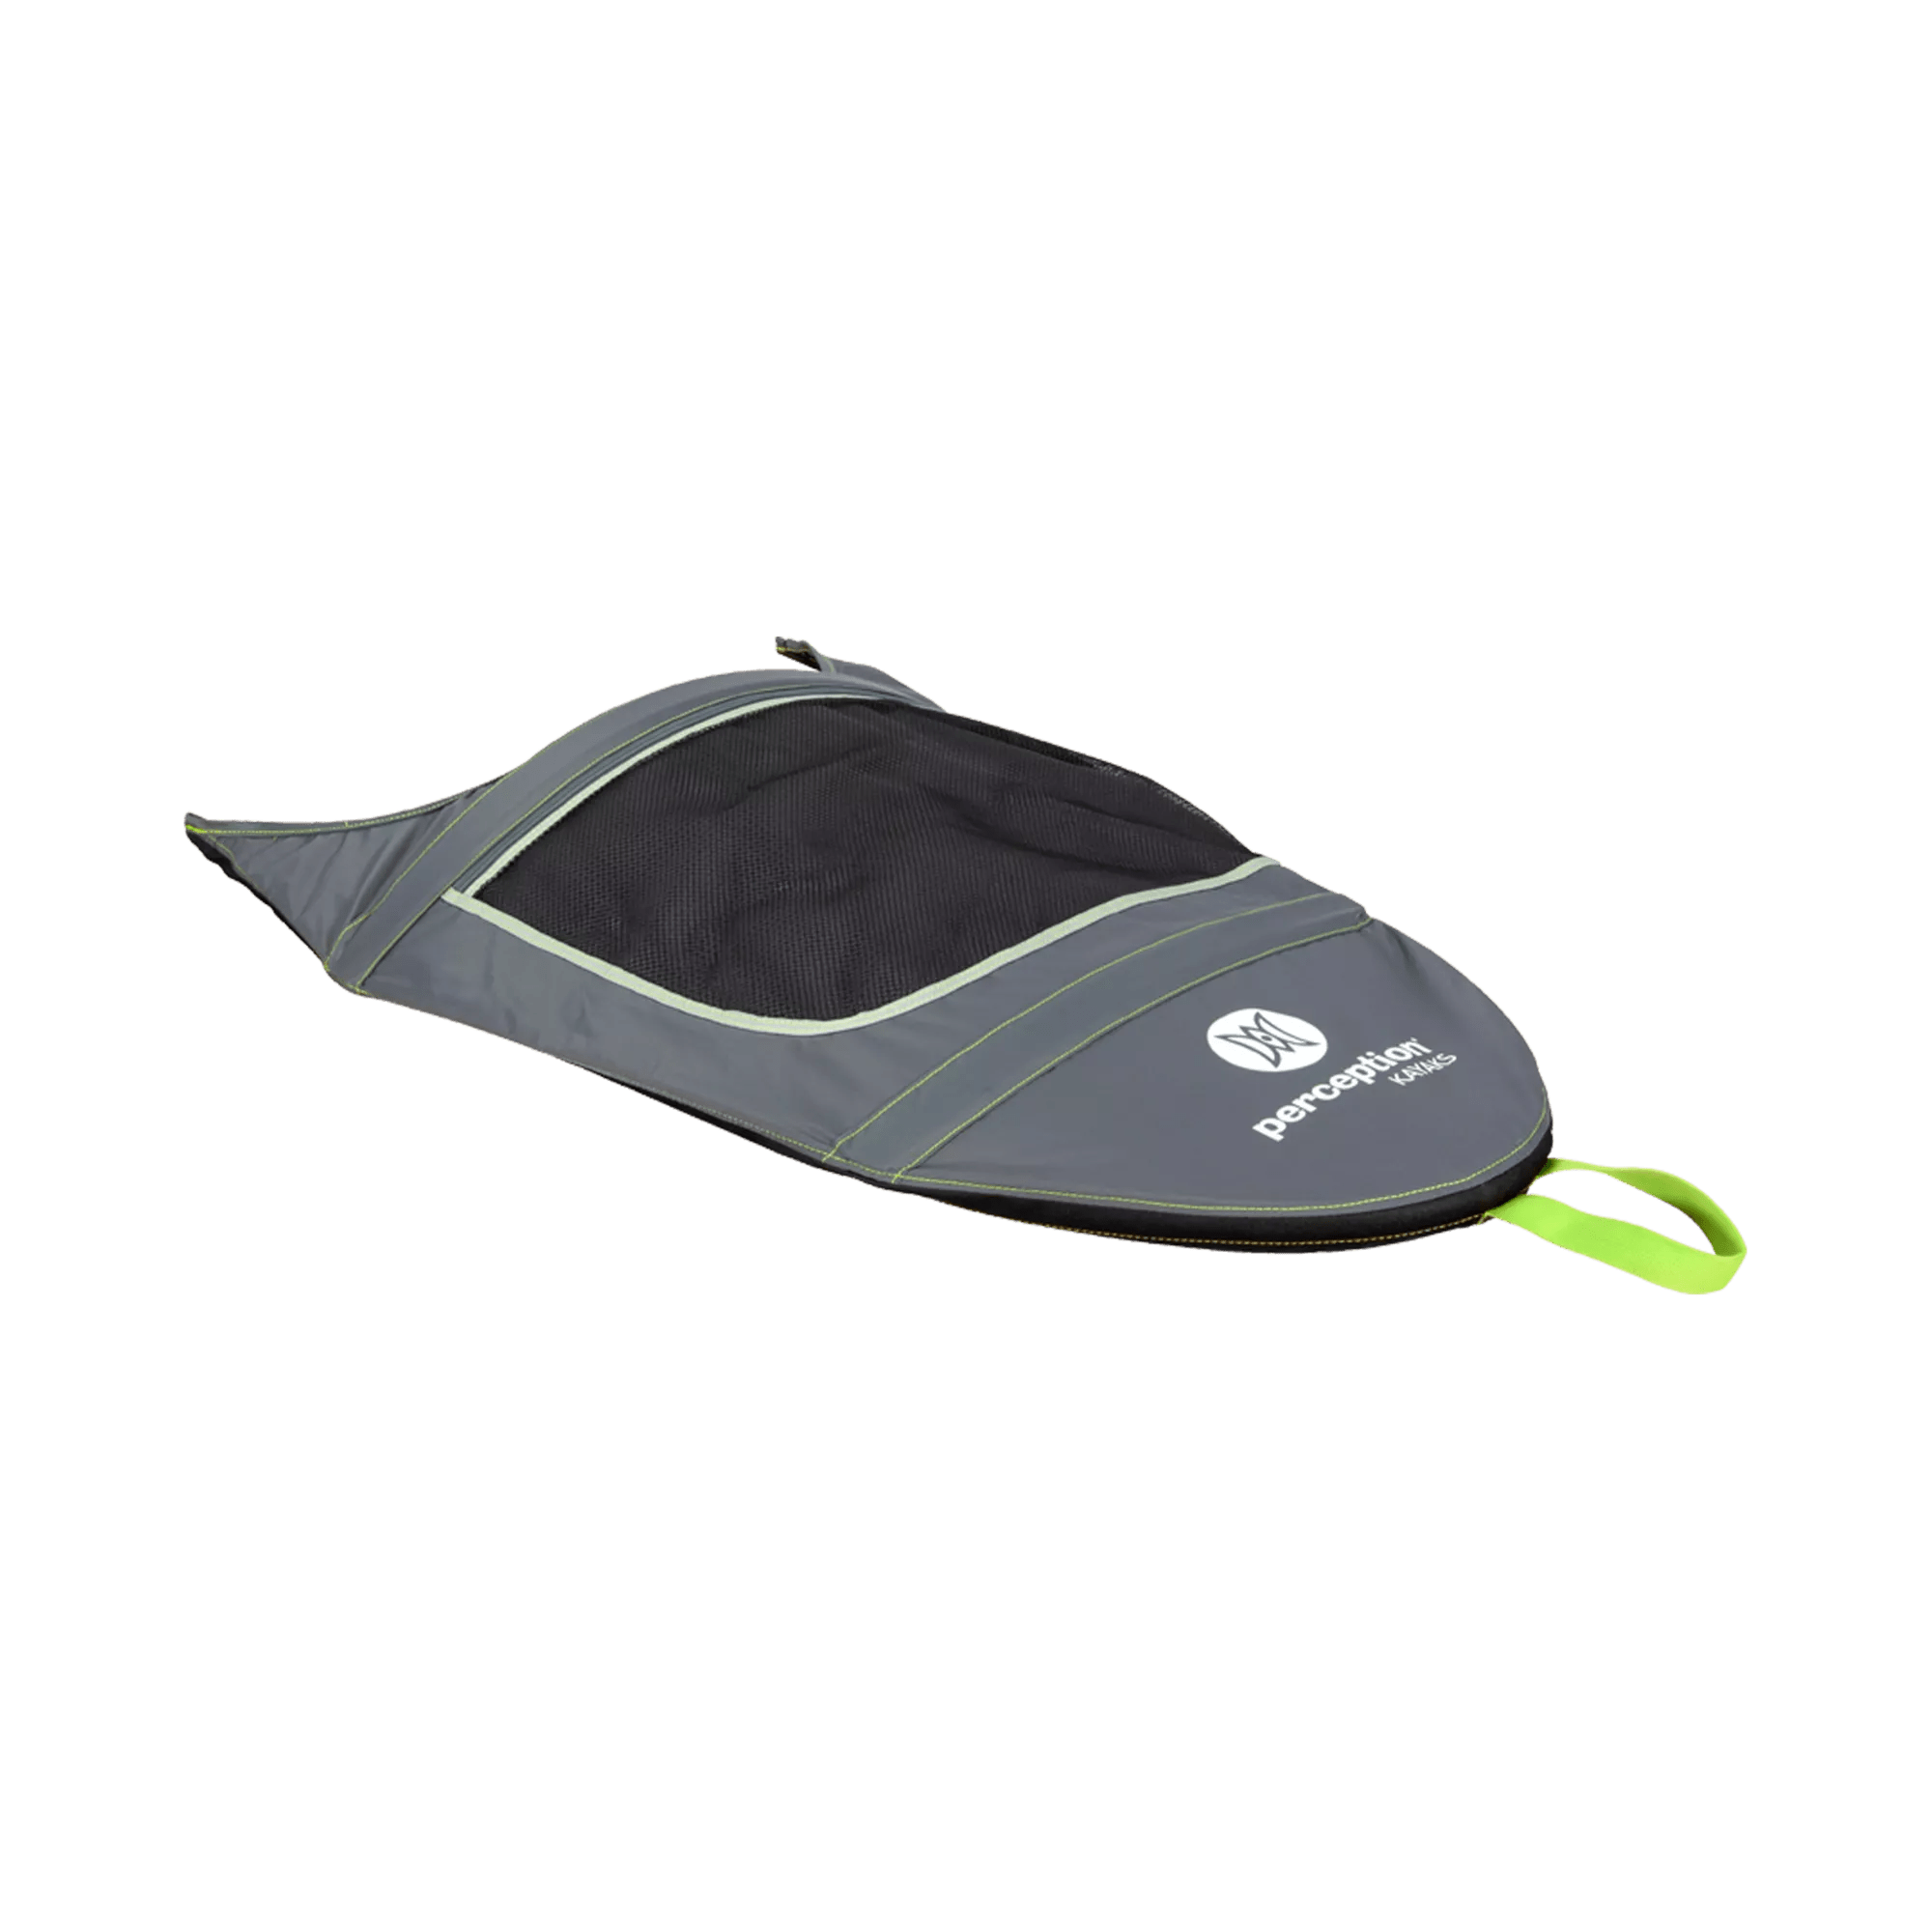 PERCEPTION - TrueFit Kayak Sun Shield for Sit-In Kayaks - Size P12-P13 - Green - 8080060 - 